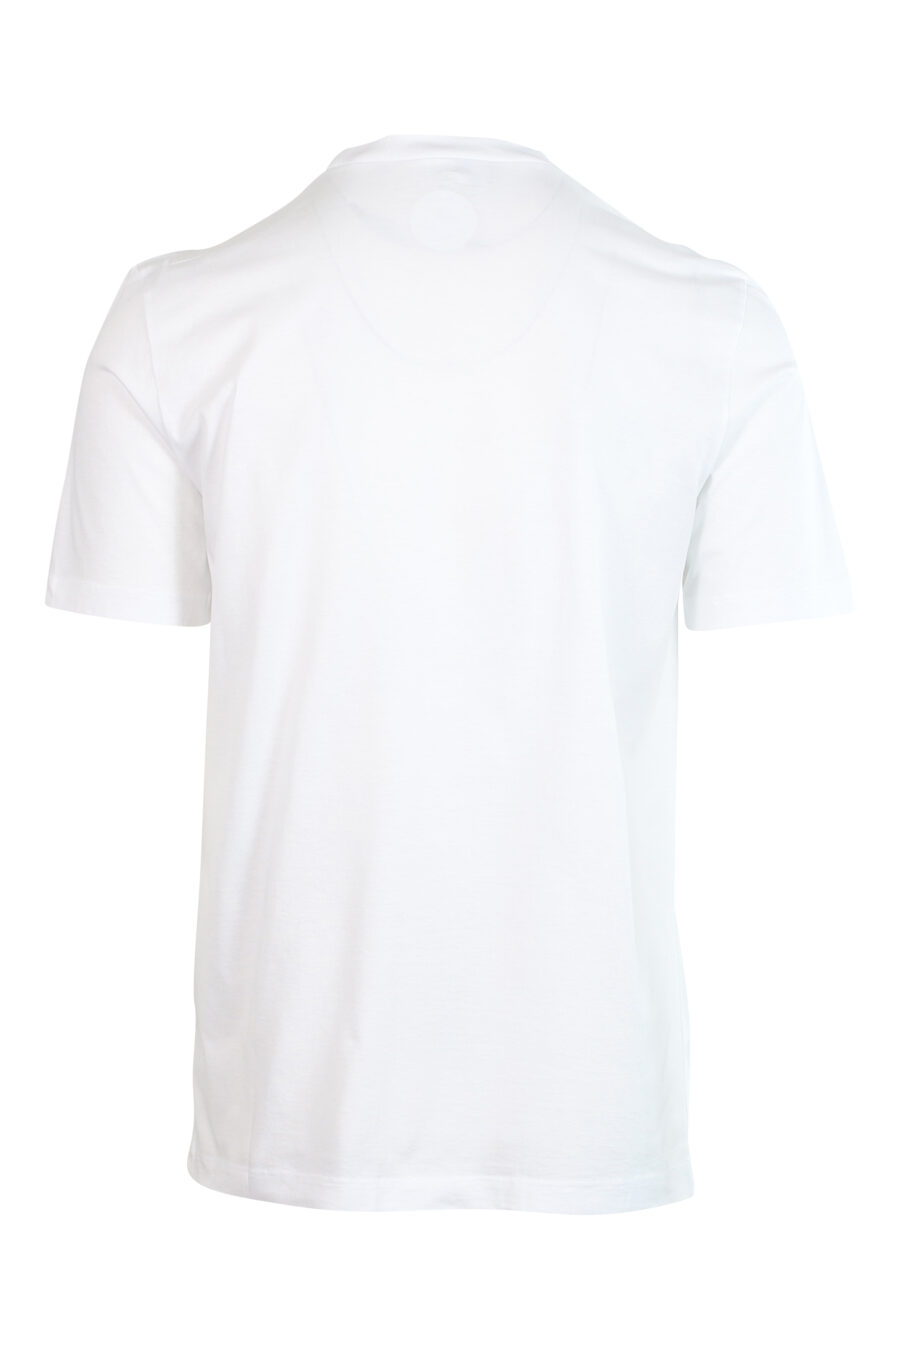 Camiseta blanca con minilogo negro "bold" y hoja naranja - 8052134990148 2